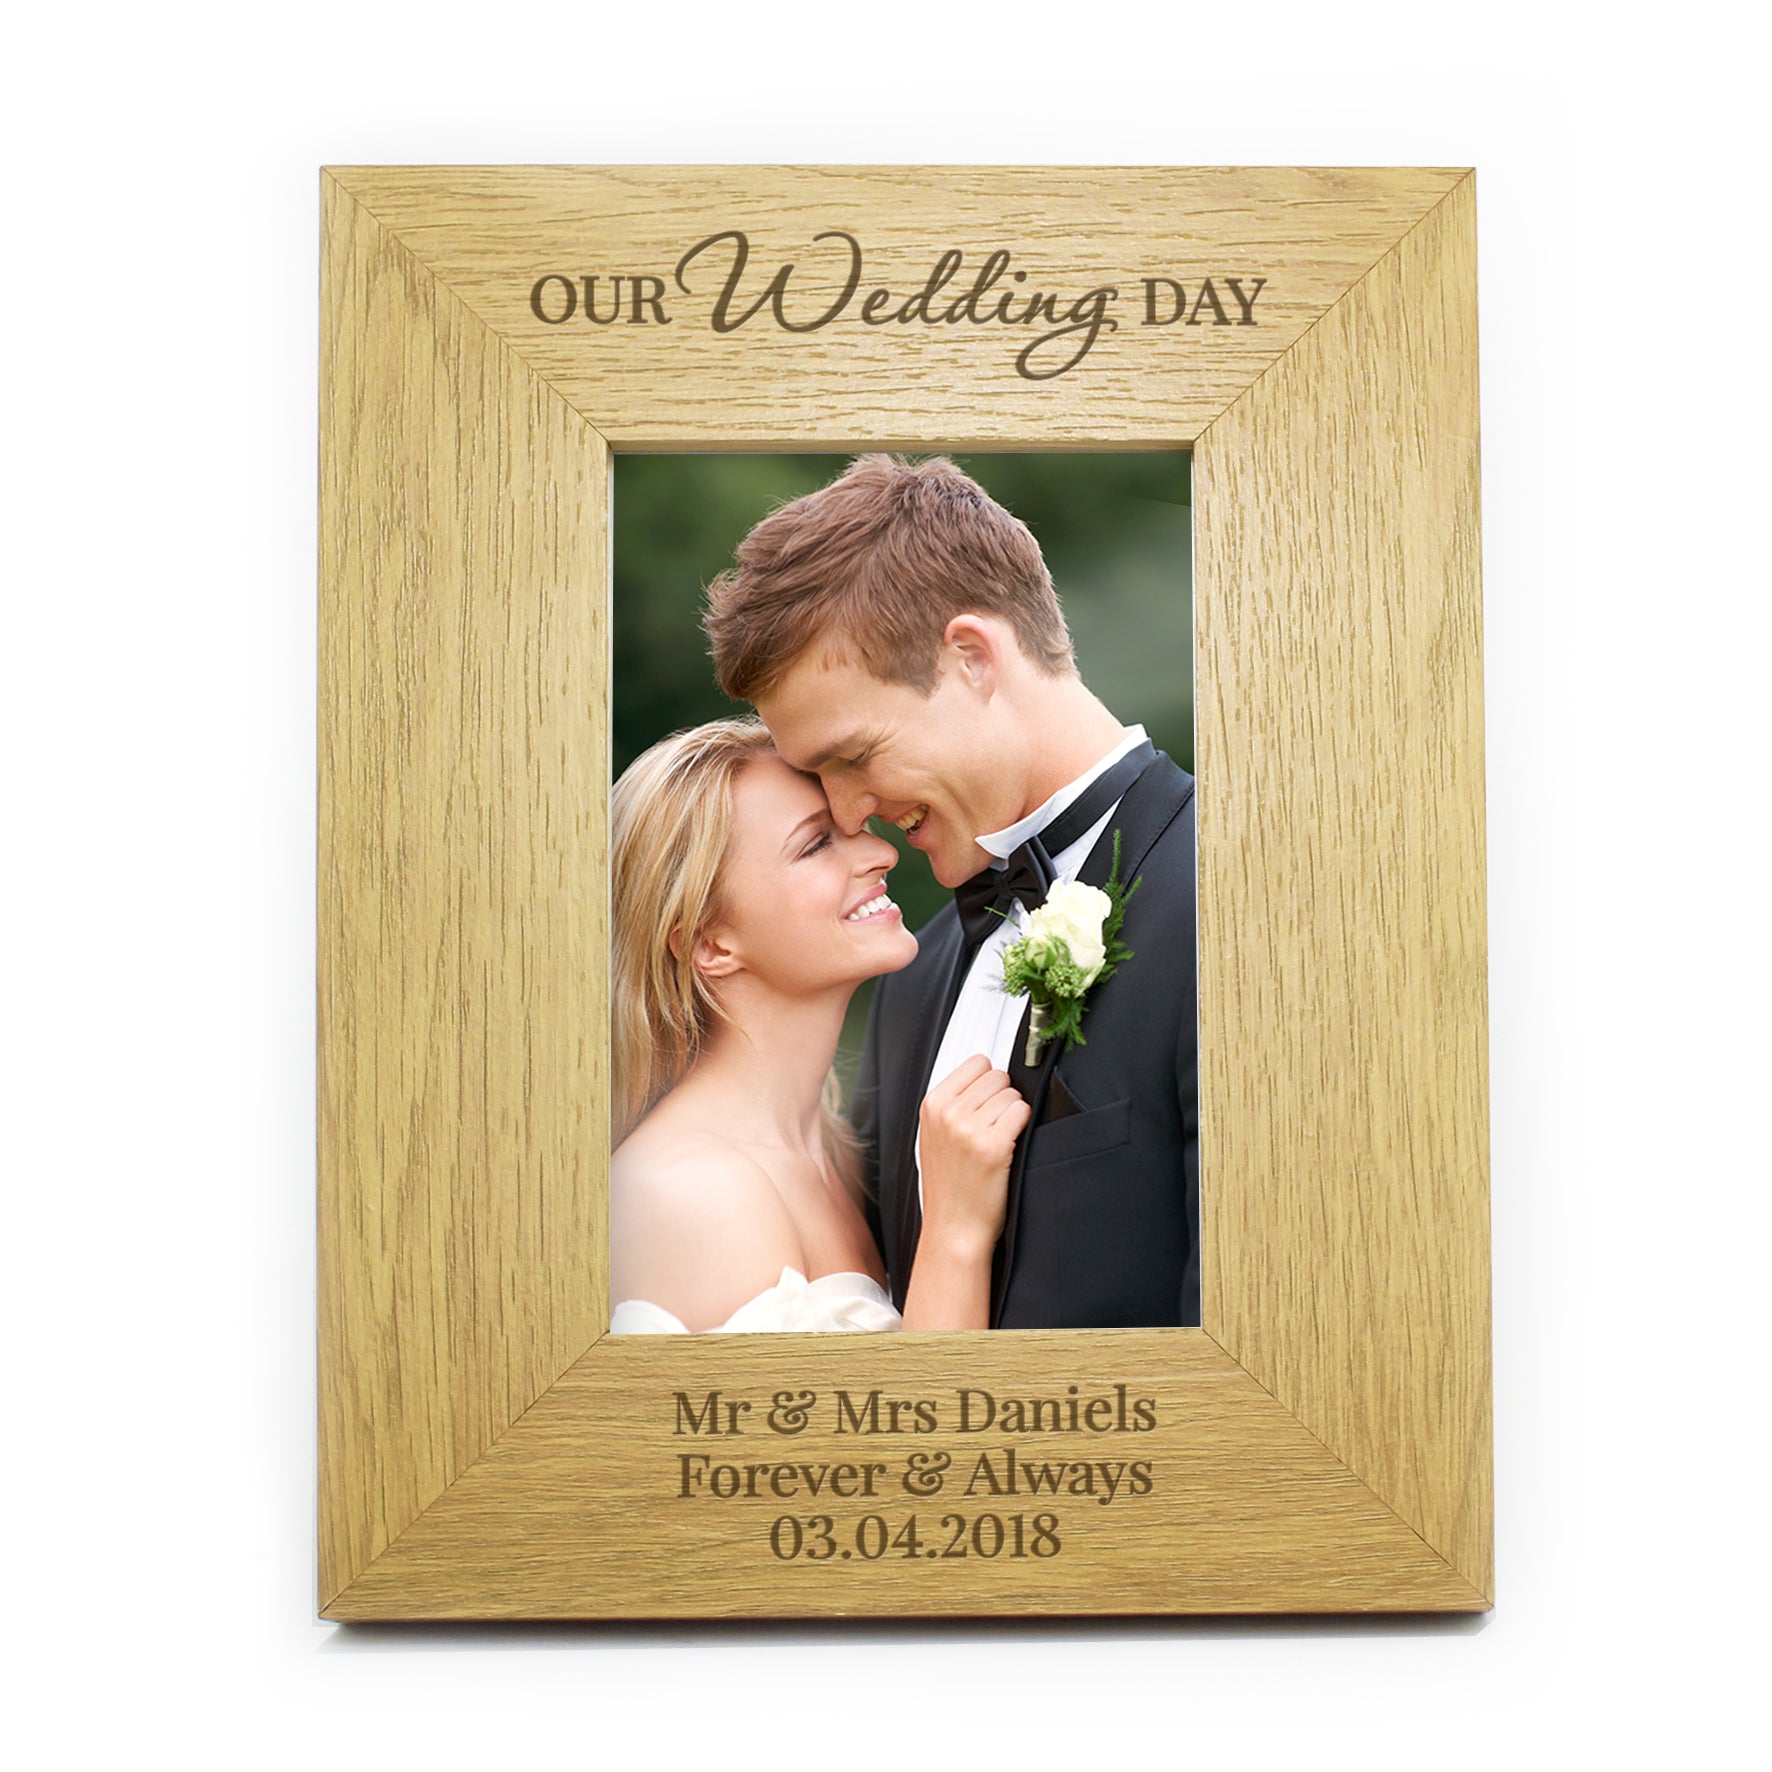 Personalised Our Wedding Day 4x6 Oak Finish Photo Frame